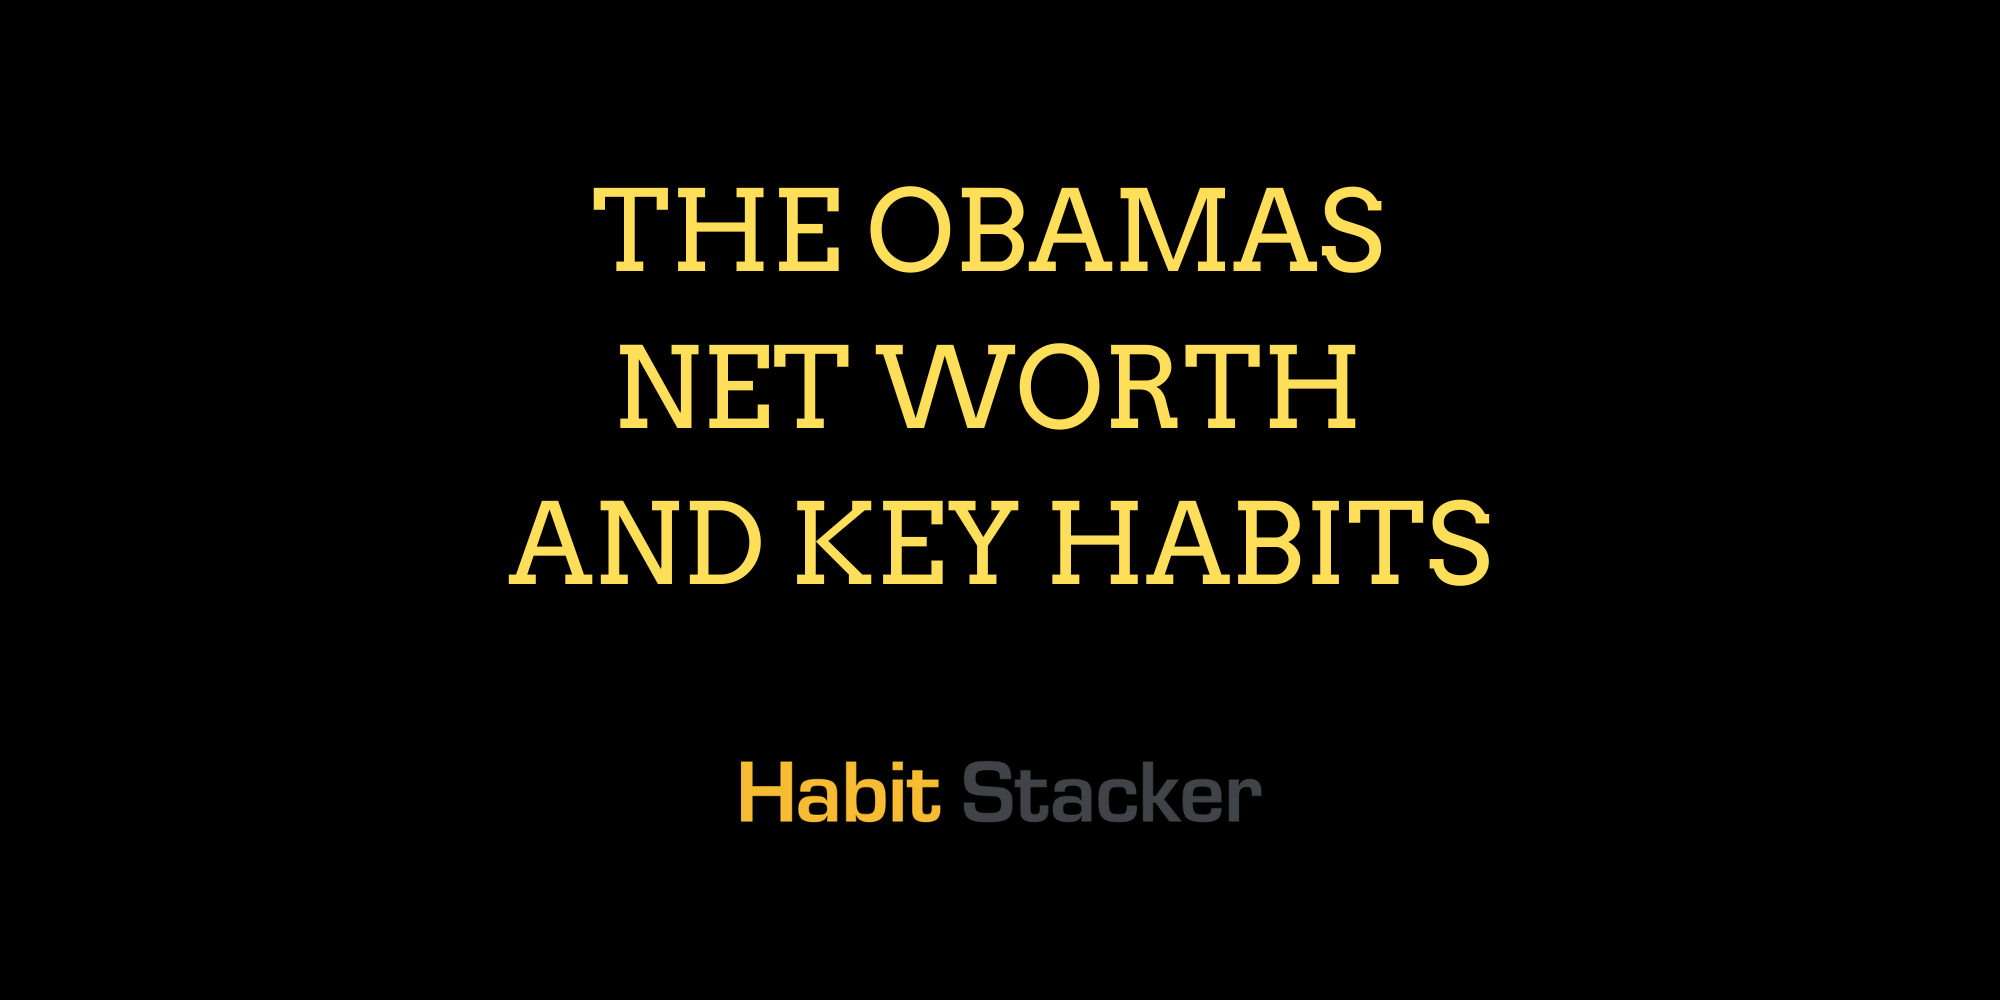 The Obamas Net Worth and Key Habits